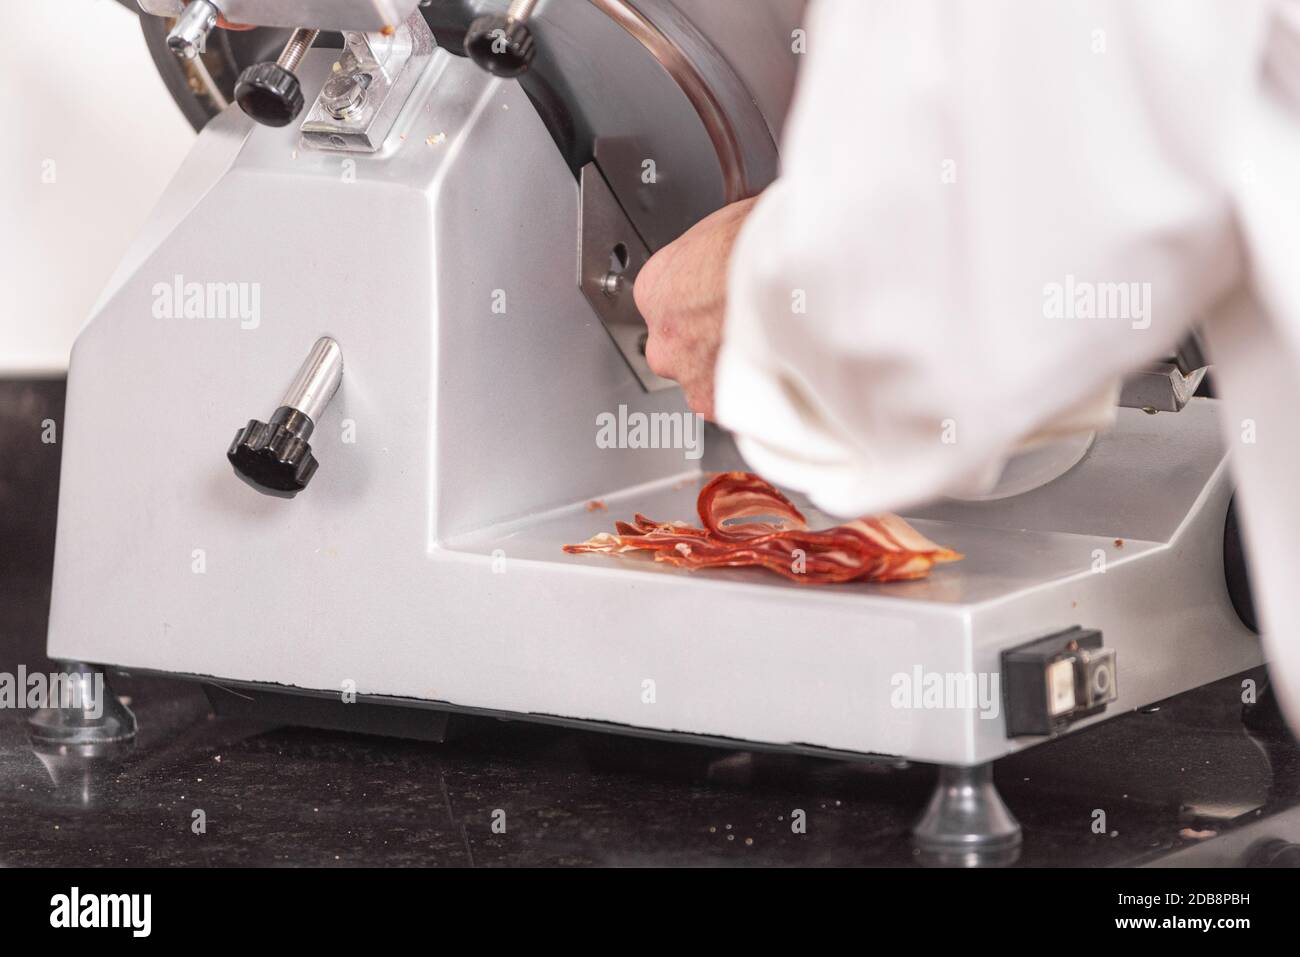 https://c8.alamy.com/comp/2DB8PBH/chef-using-ham-slicer-machine-slicing-bacon-2DB8PBH.jpg